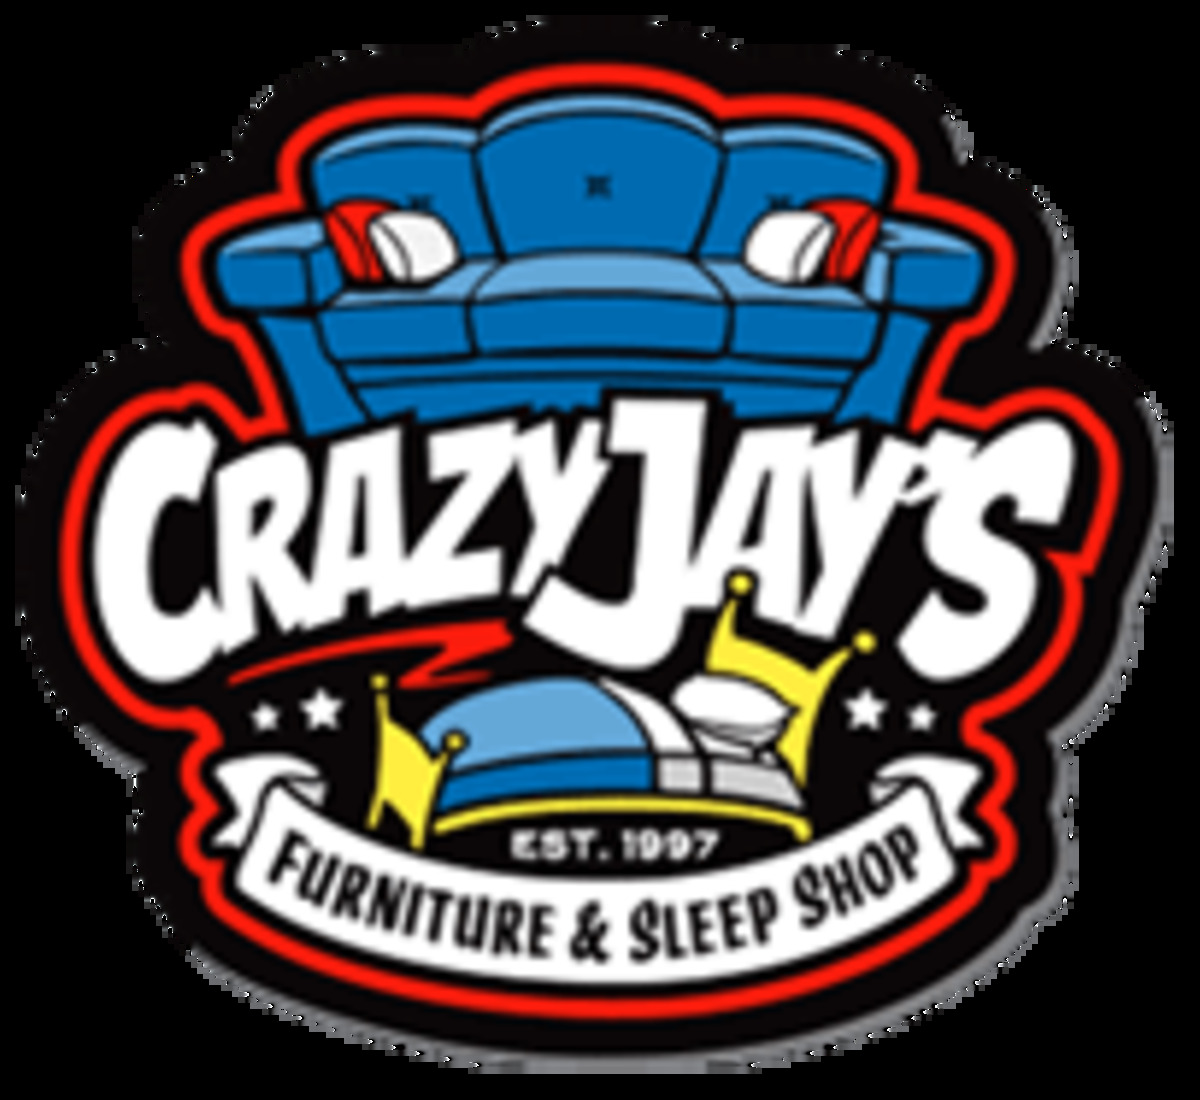  Crazy Jay's Furniture & Sleep Shop West